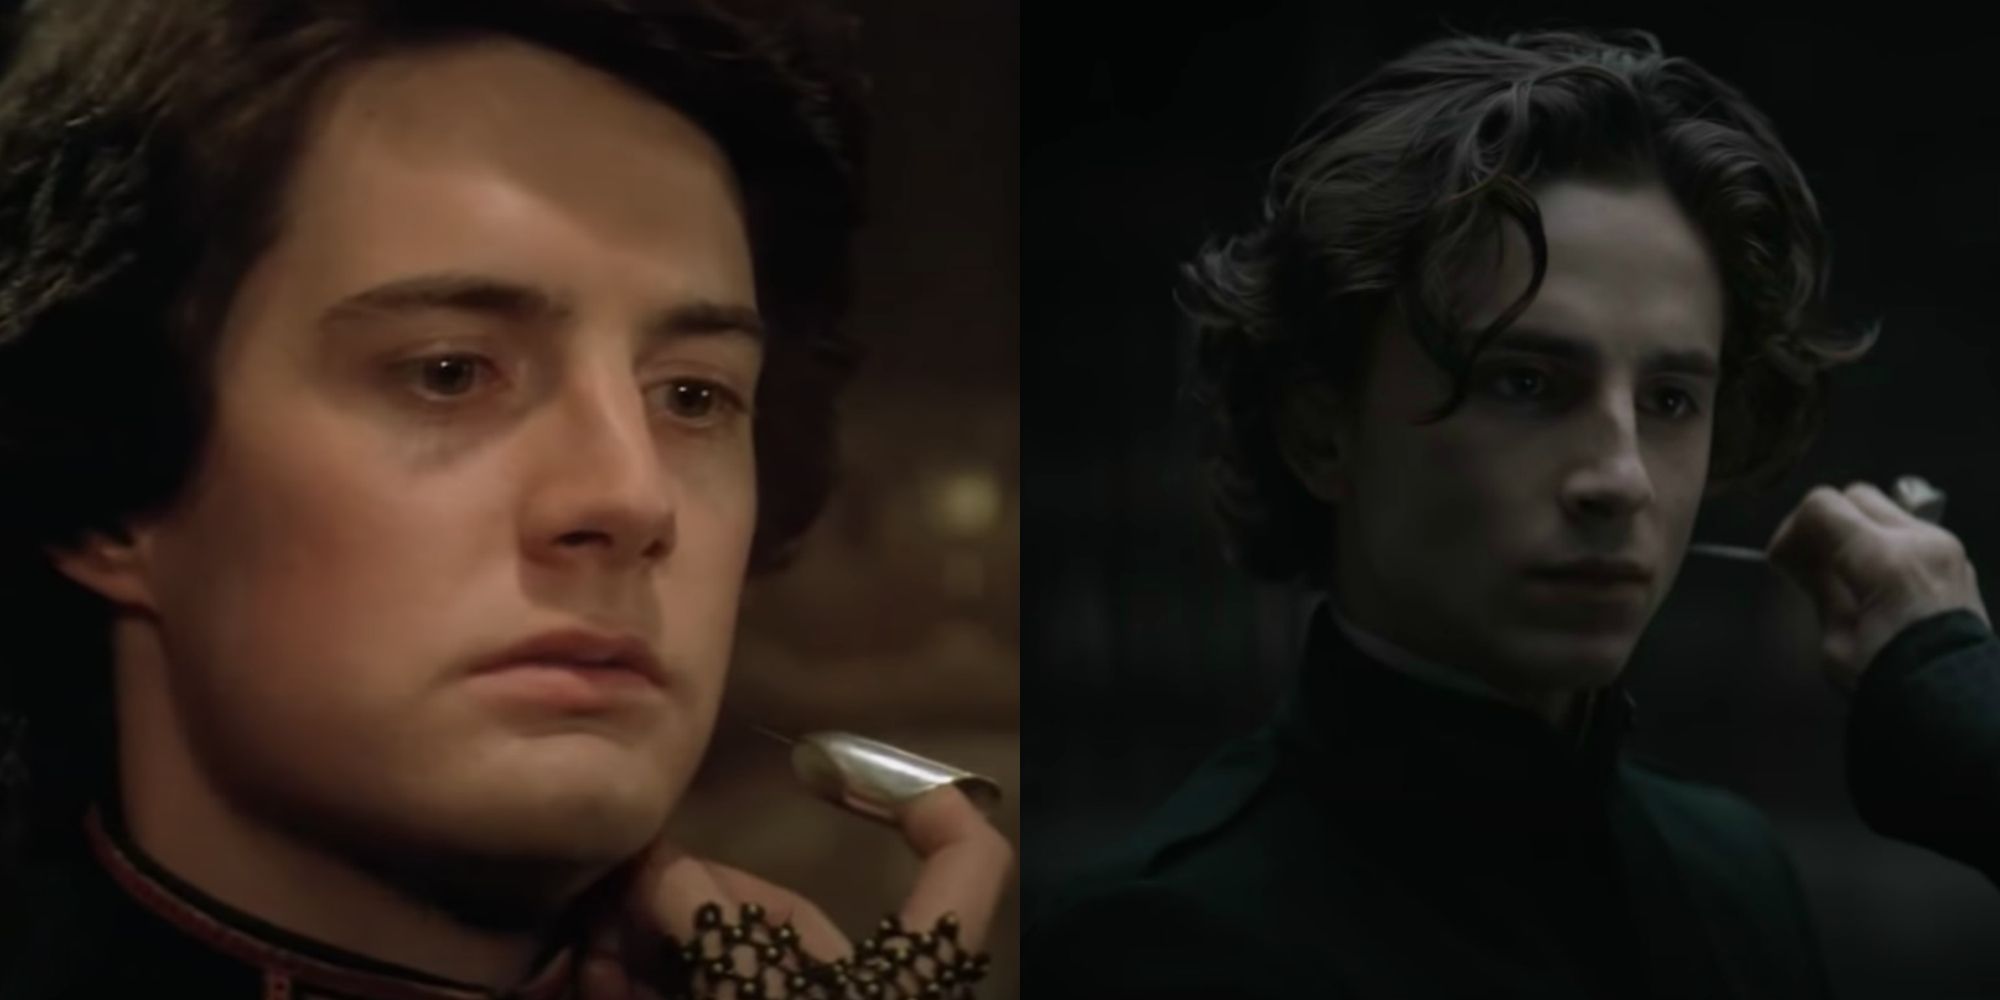 Dune 2020 And 1984 Trailer Similarities